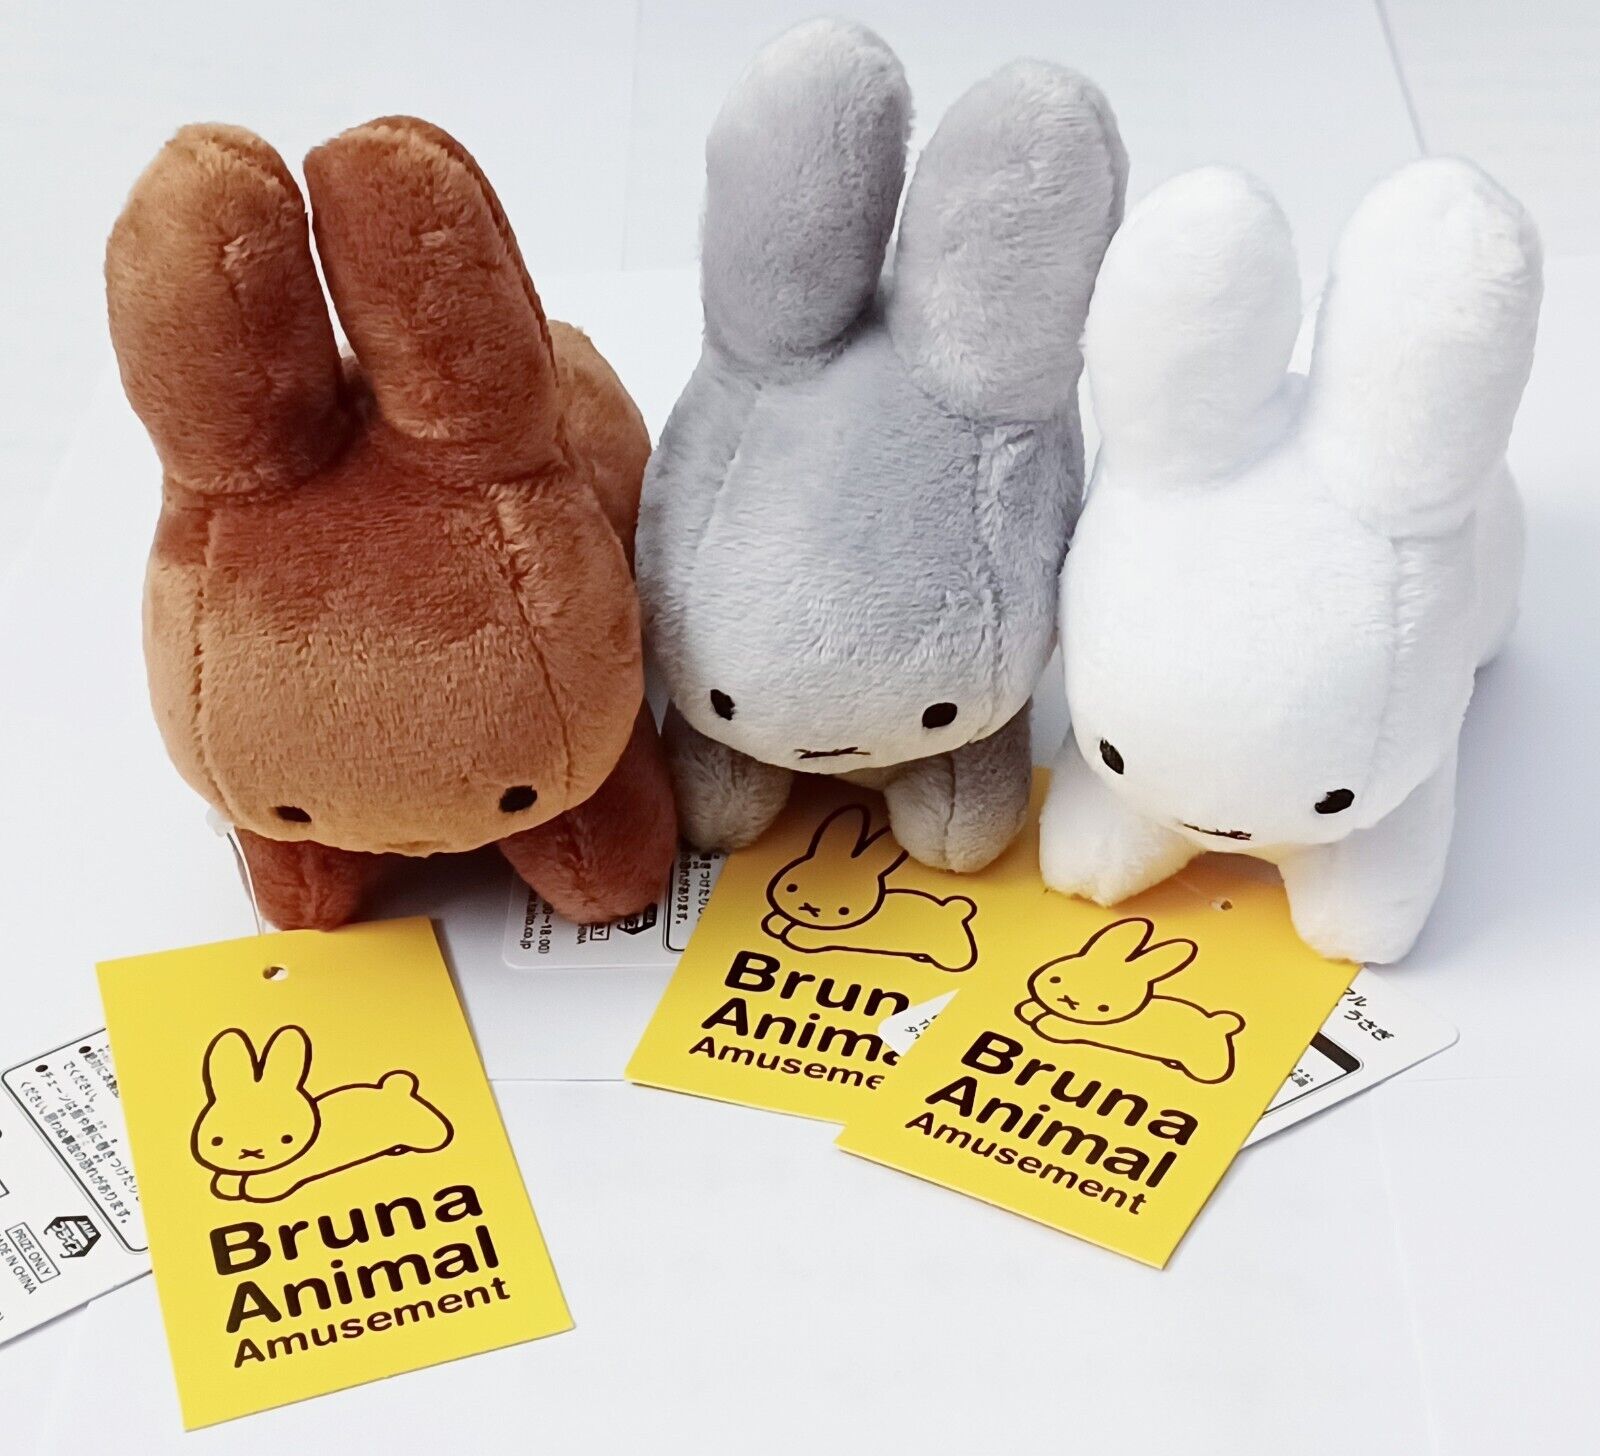 Miffy Plush Bruna Animal Amusement 3 Set Merch Brand New from Japan